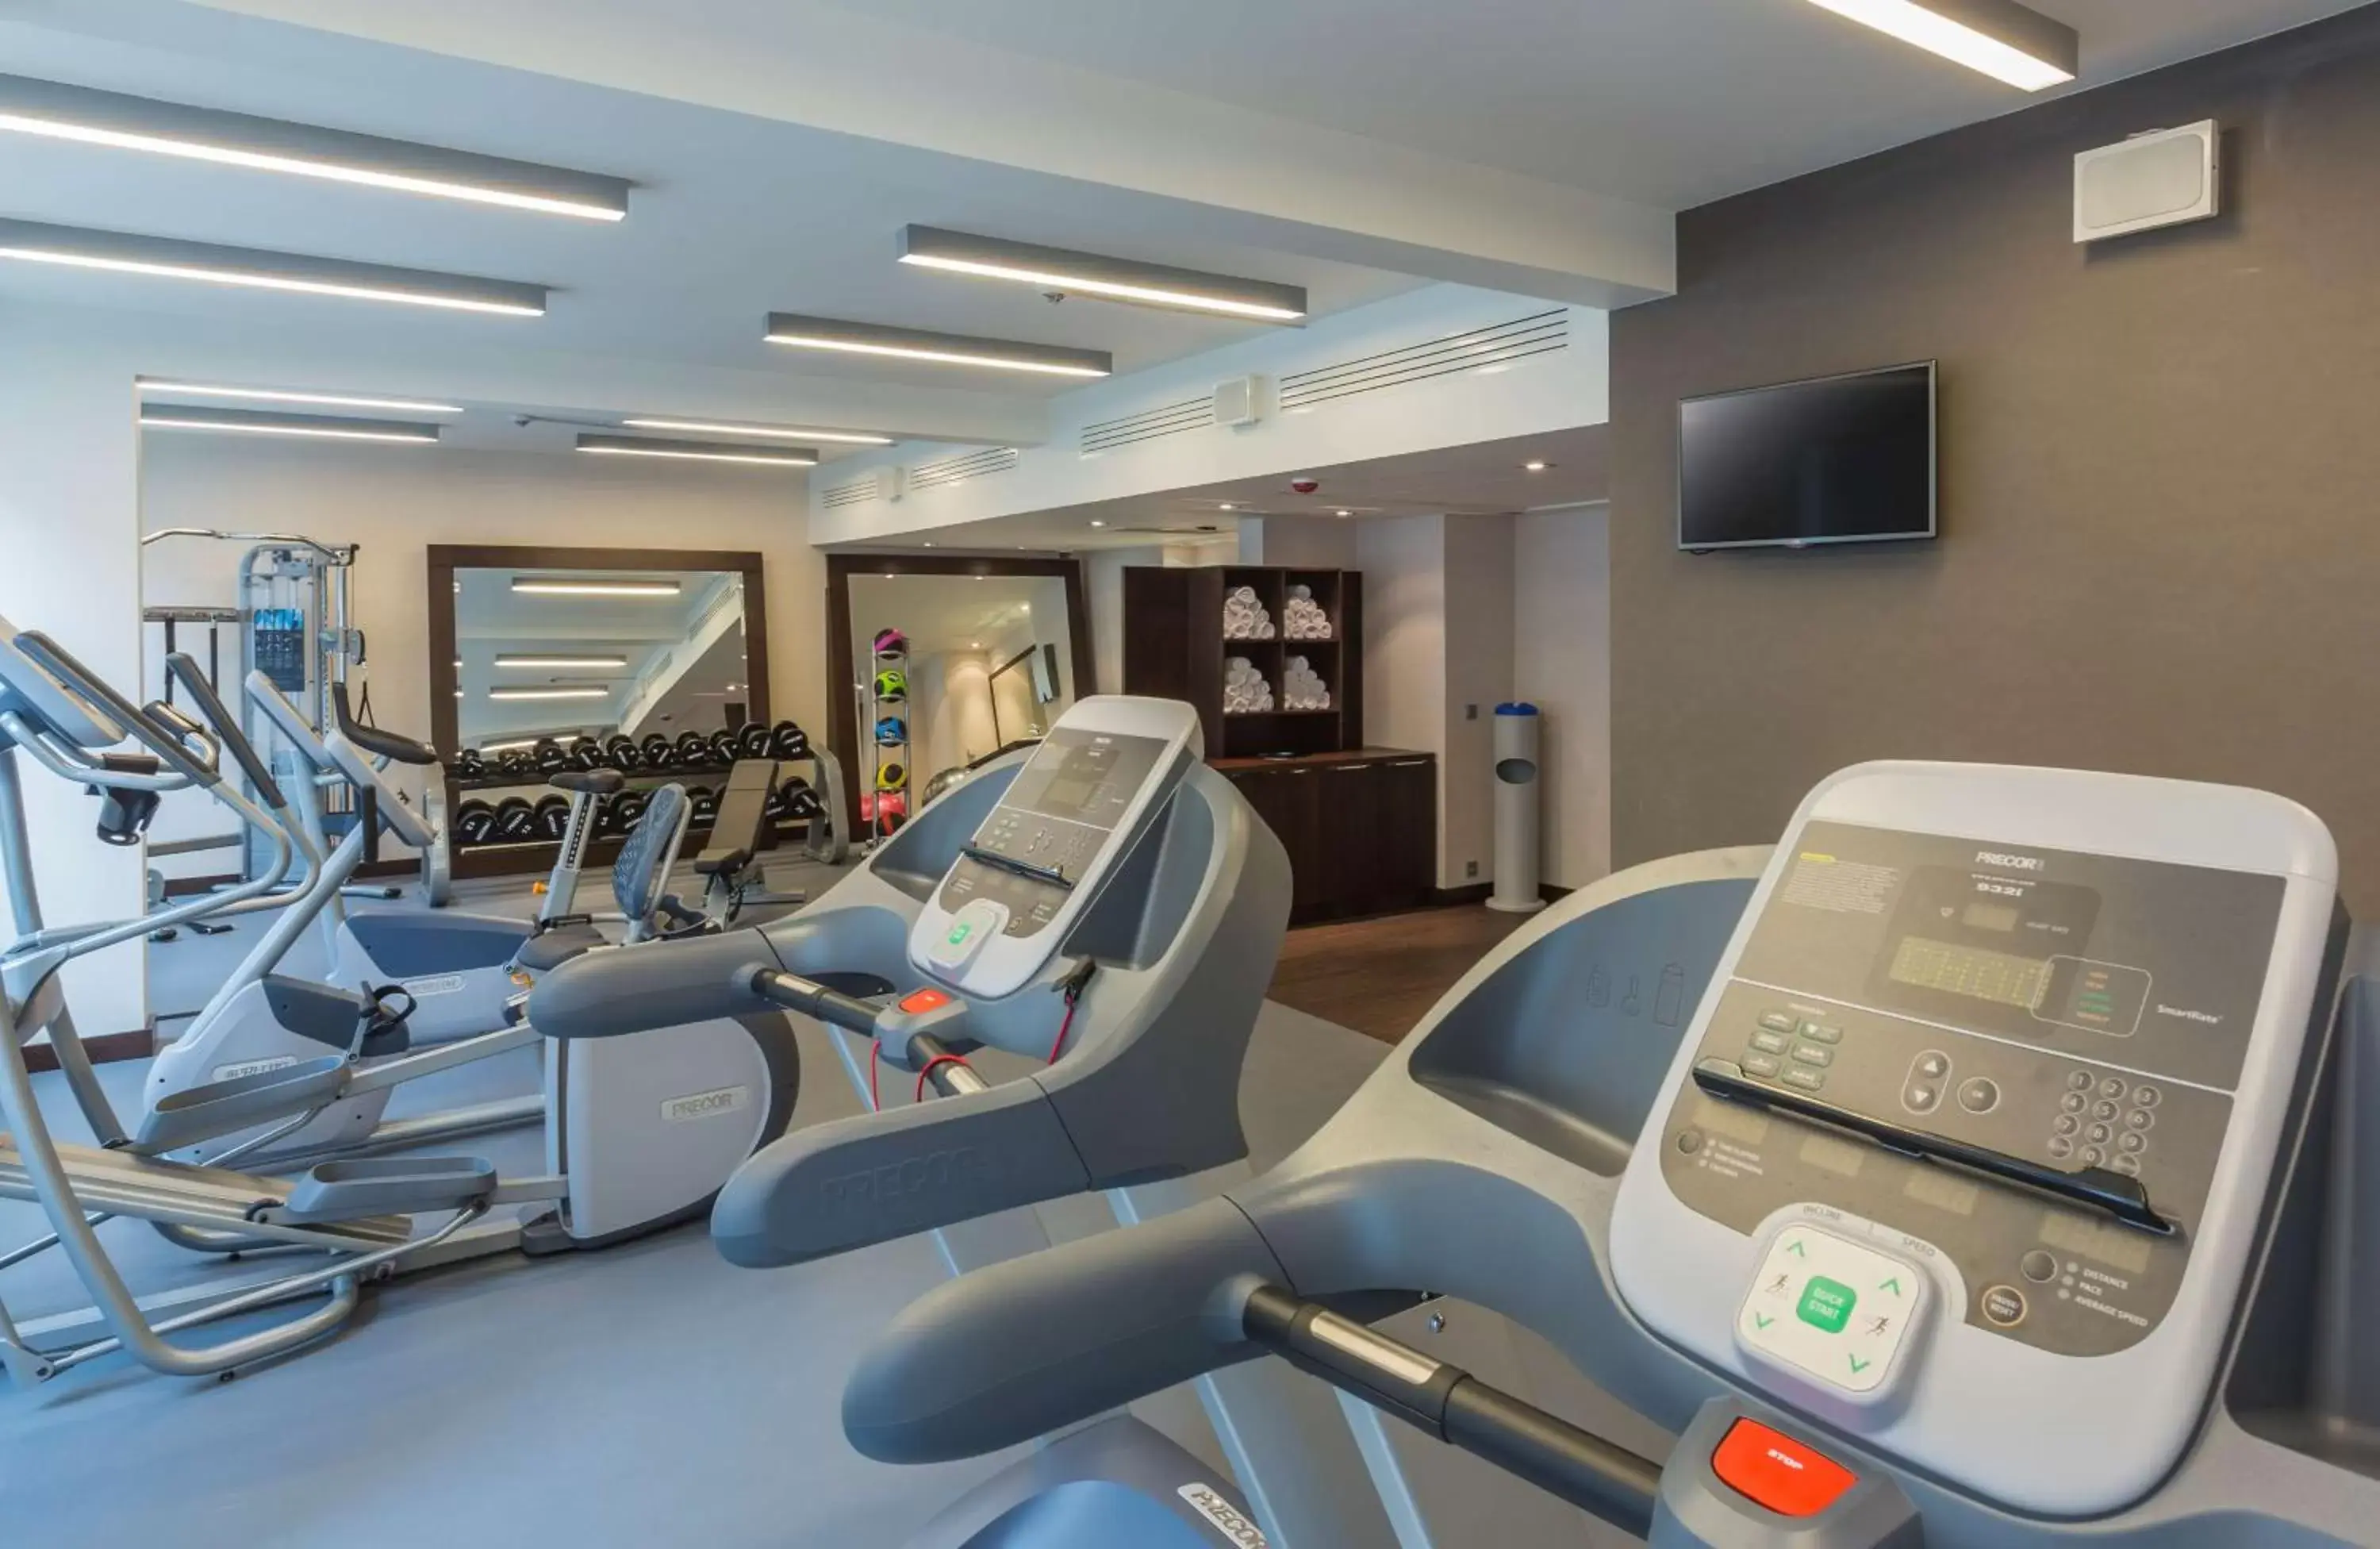 Fitness centre/facilities, Fitness Center/Facilities in Hilton Garden Inn Krakow Airport